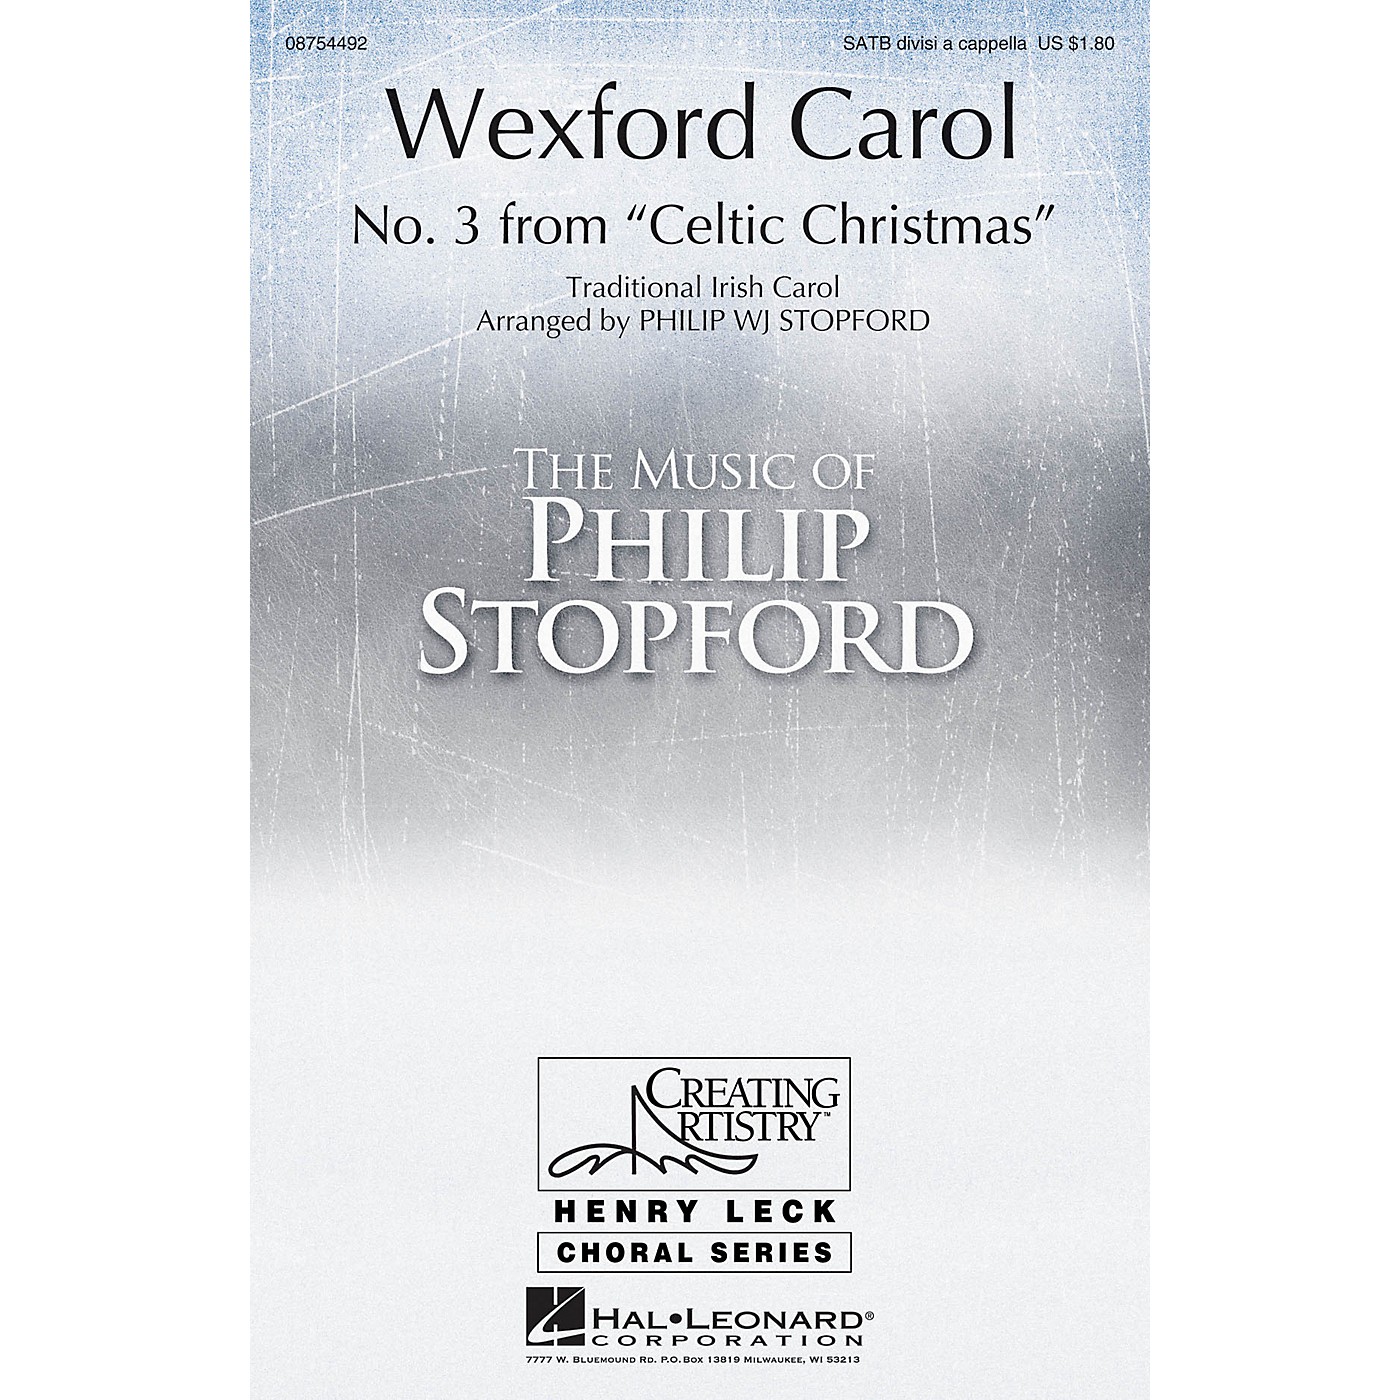 Hal Leonard Wexford Carol SATB DV A Cappella arranged by Philip Stopford thumbnail